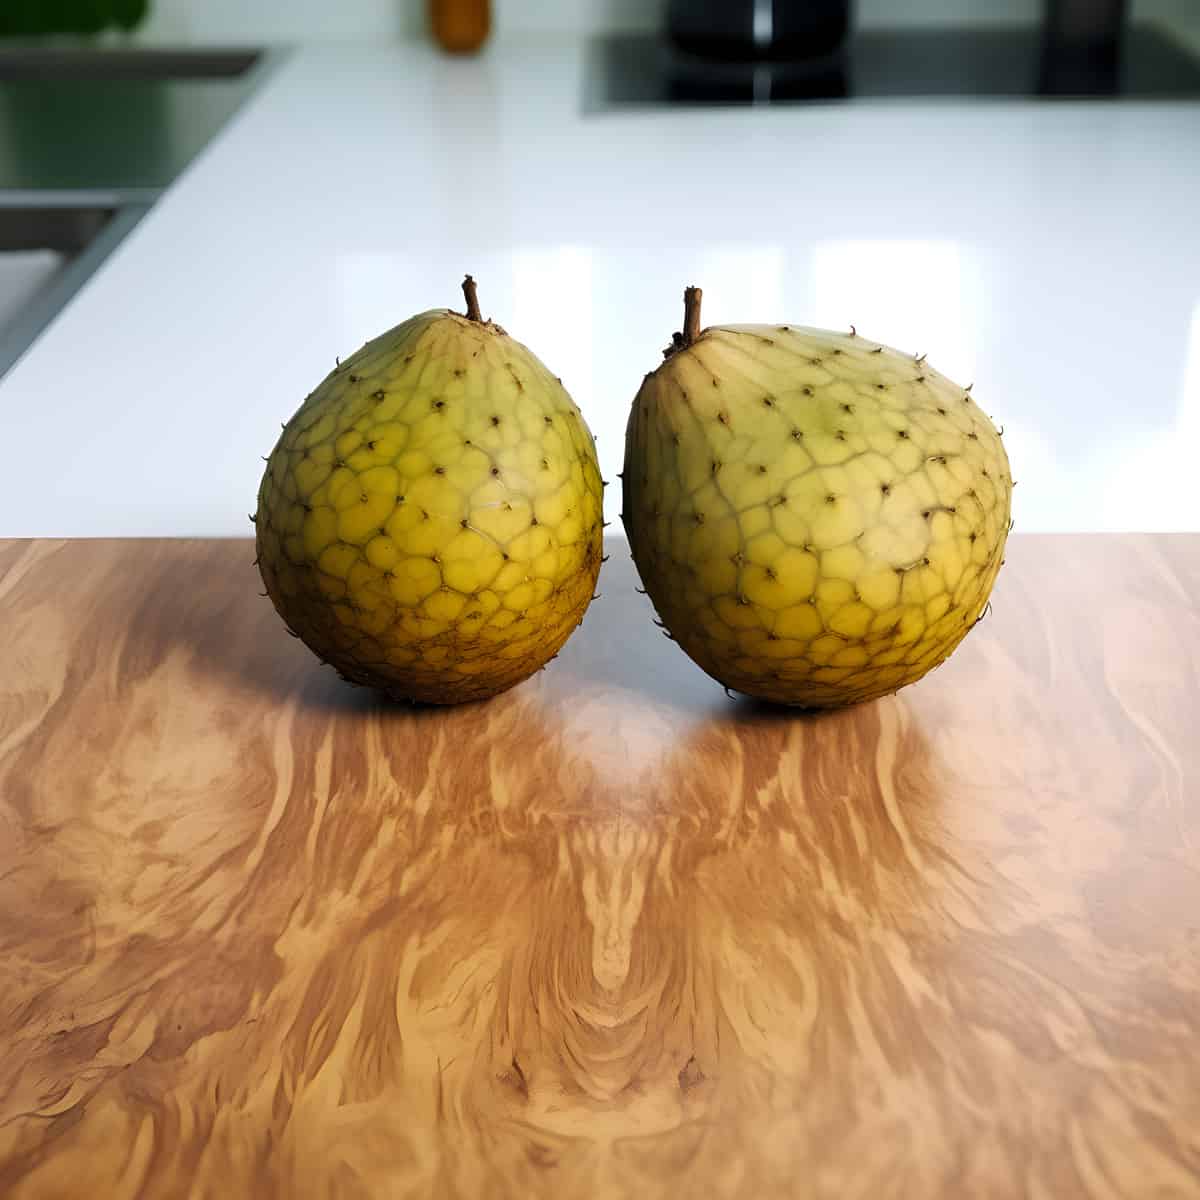 Mountain Soursop Fruit on a kitchen counter